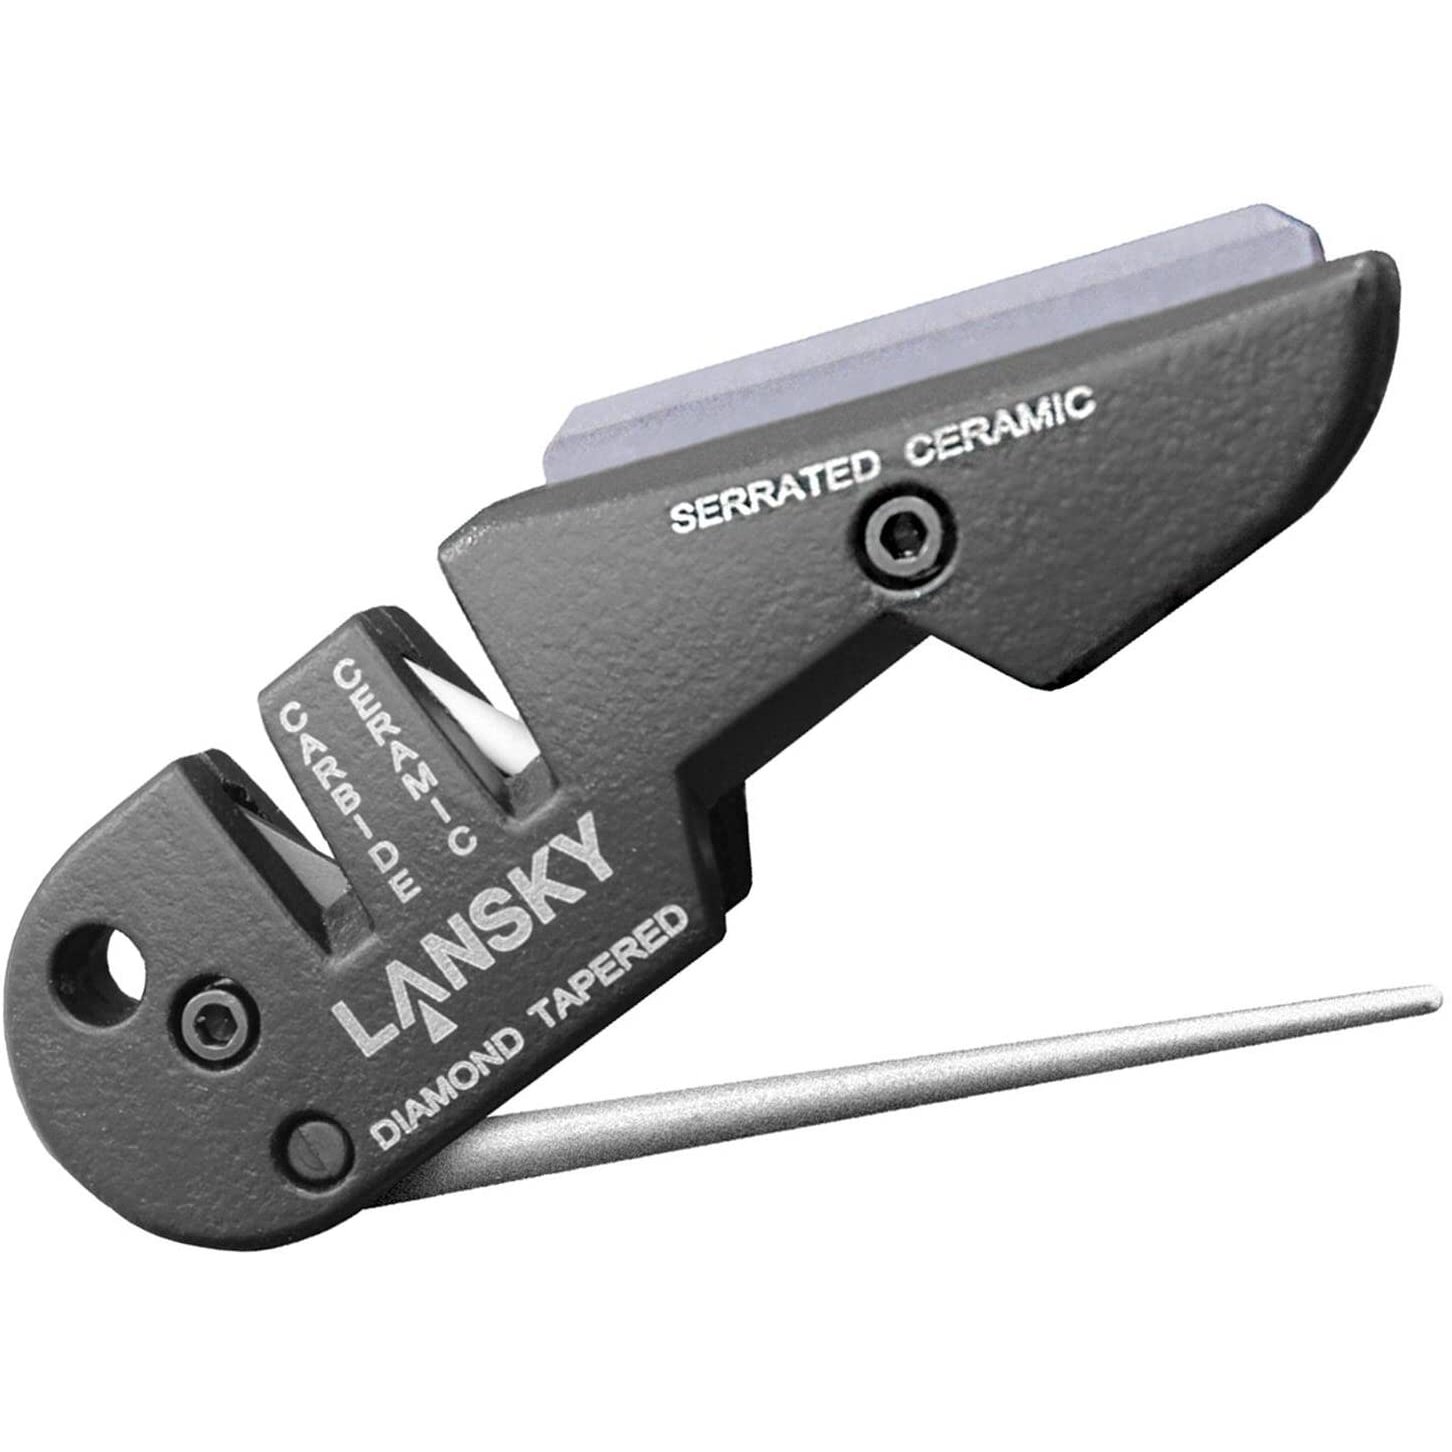 Lansky Sharpeners PS-MED01 Blade Medic